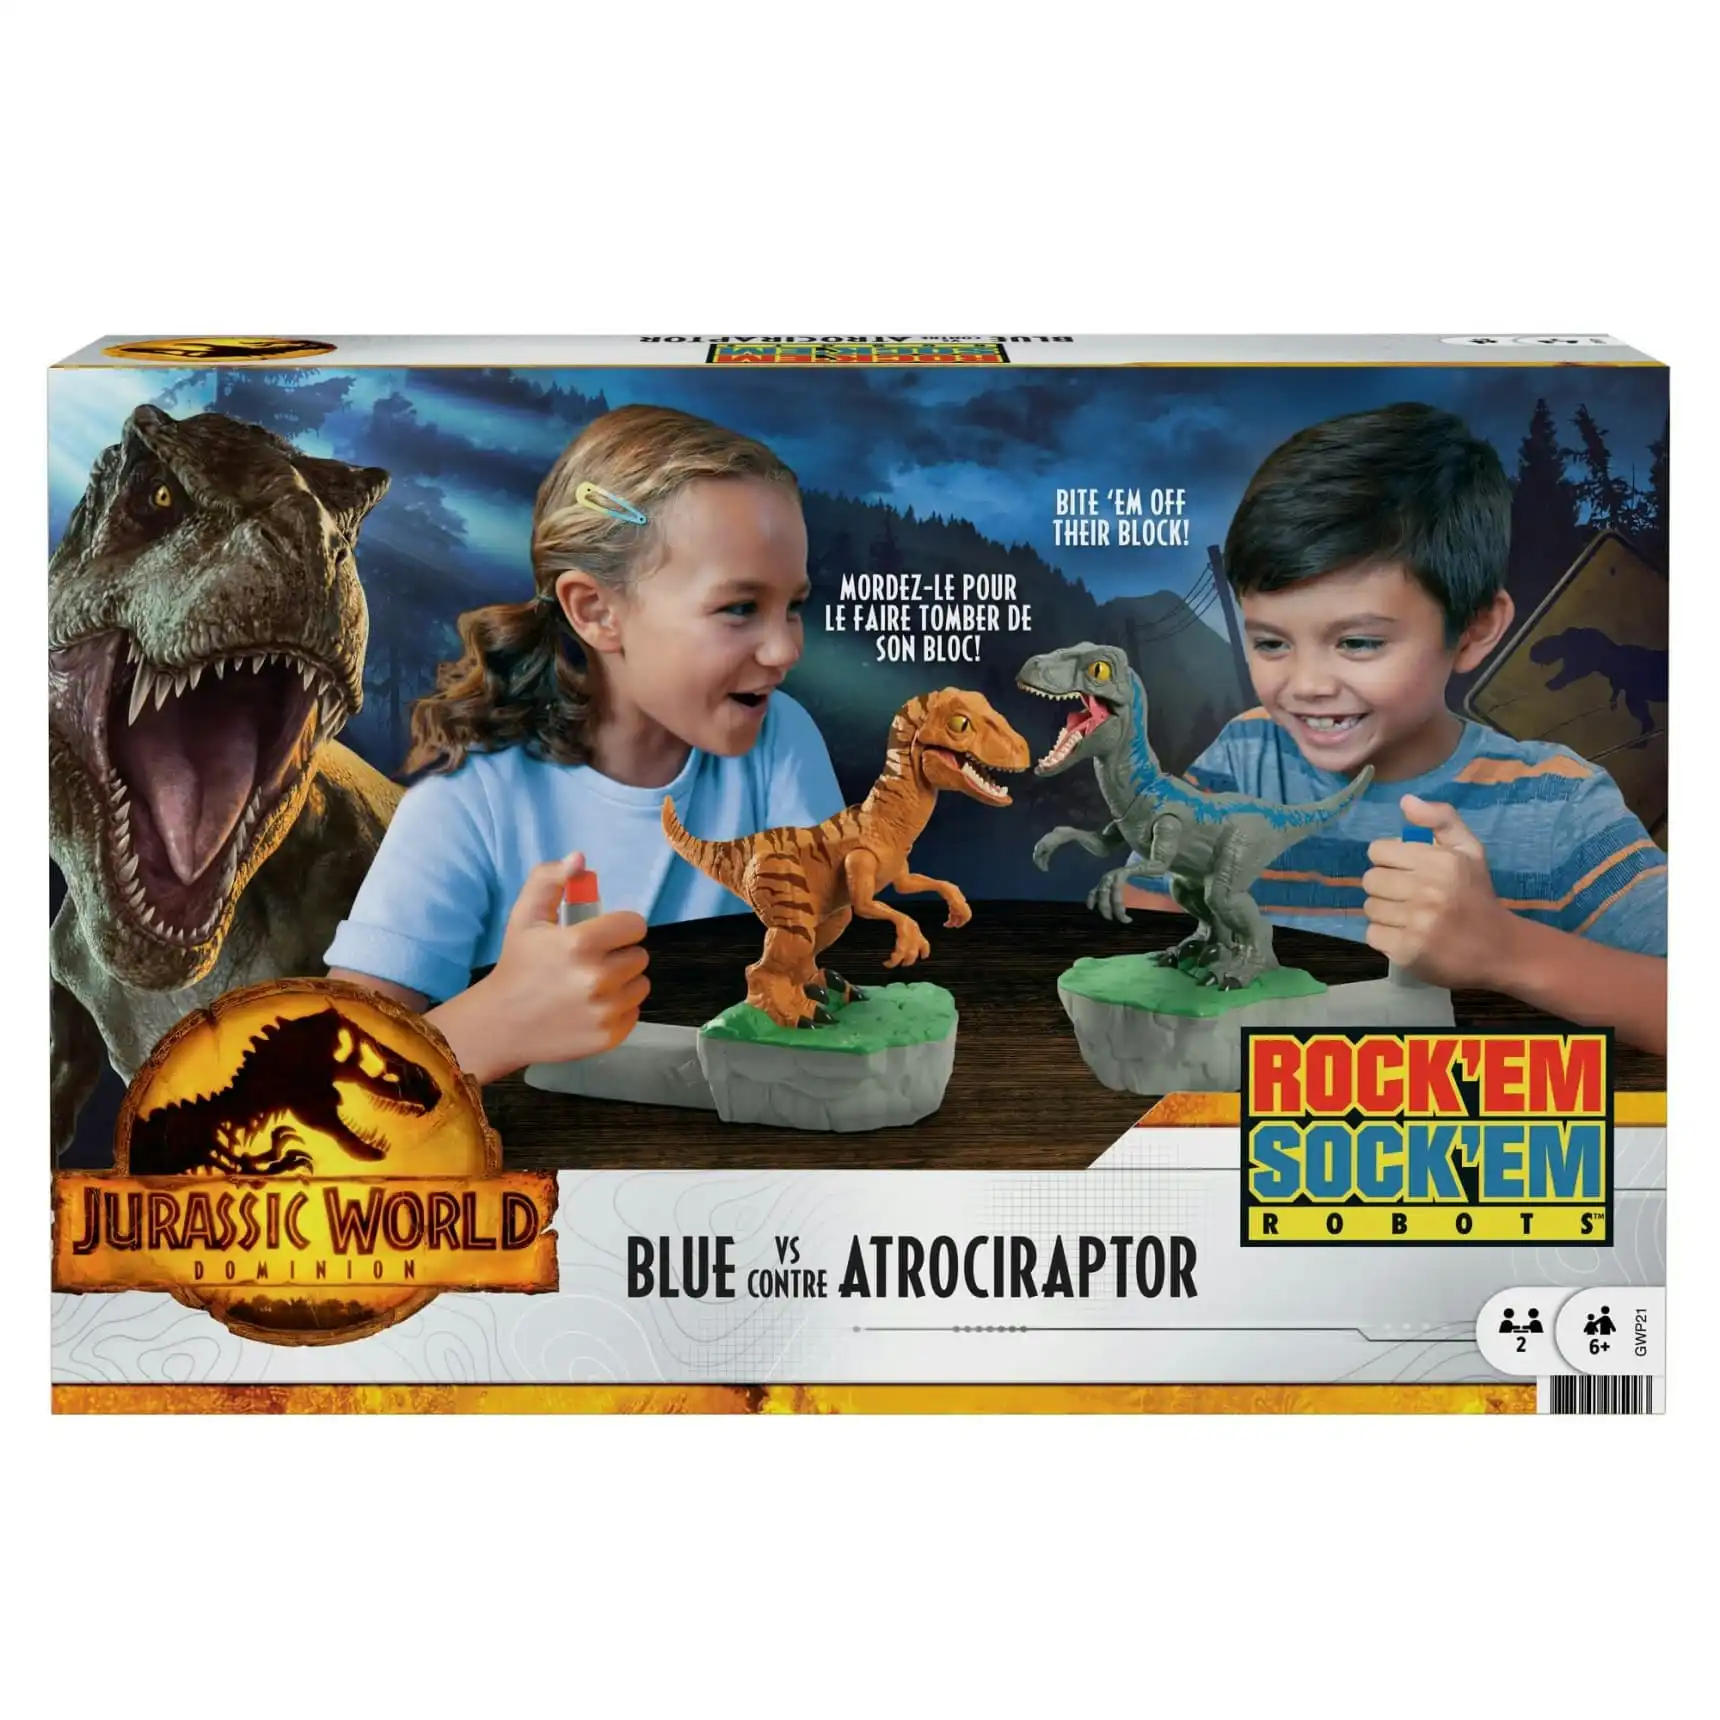 Jurassic World Rock Dominion Sock Em Robots Blue vs Atrociraptor Game - Mattel